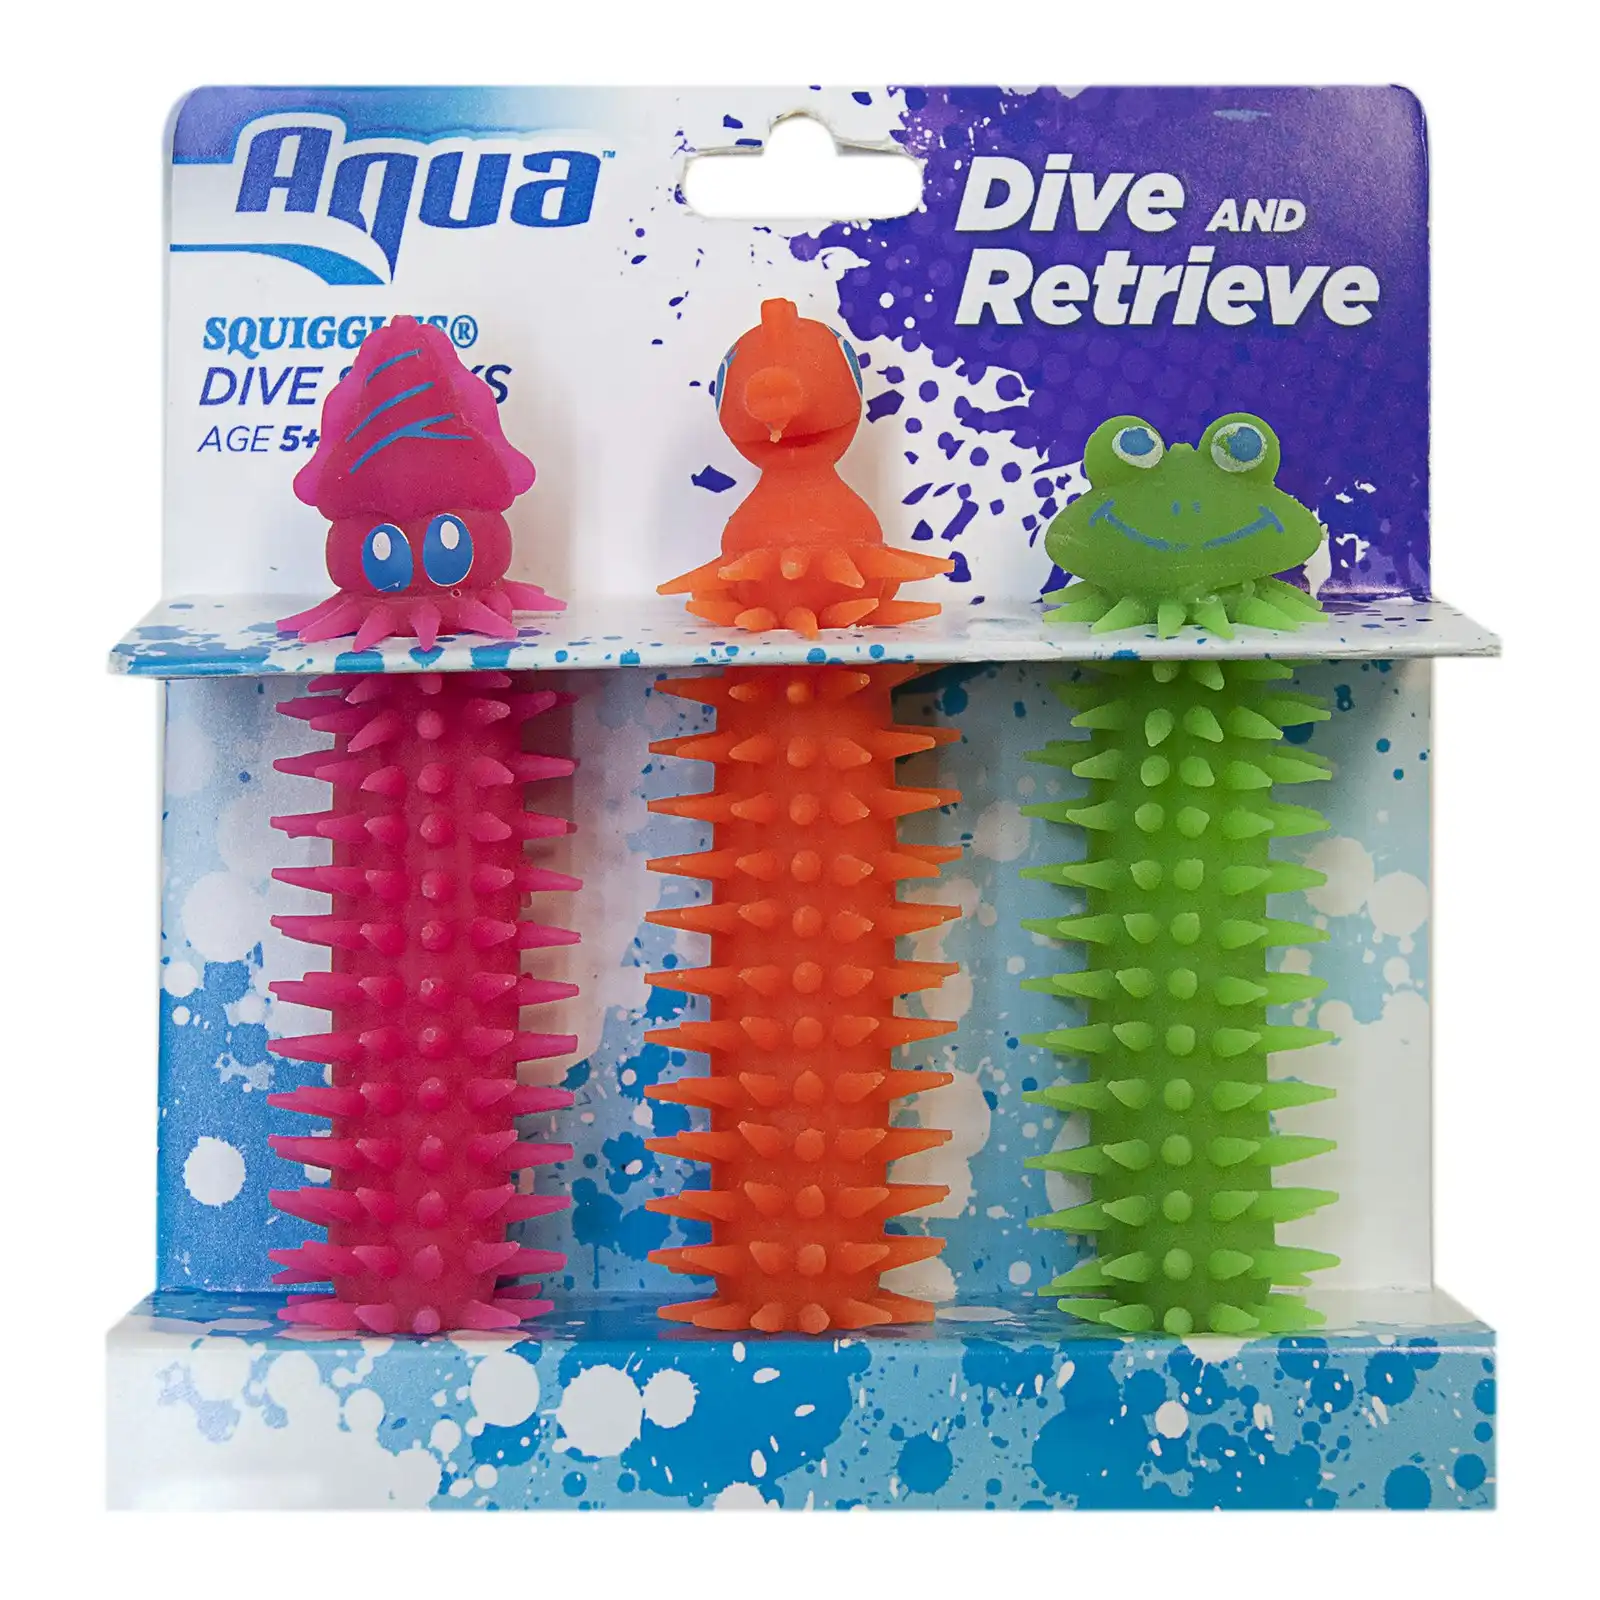 Aqua Squiggles Dive Sticks Fun Pool Game Diving/Swimming Underwater Activity Toy